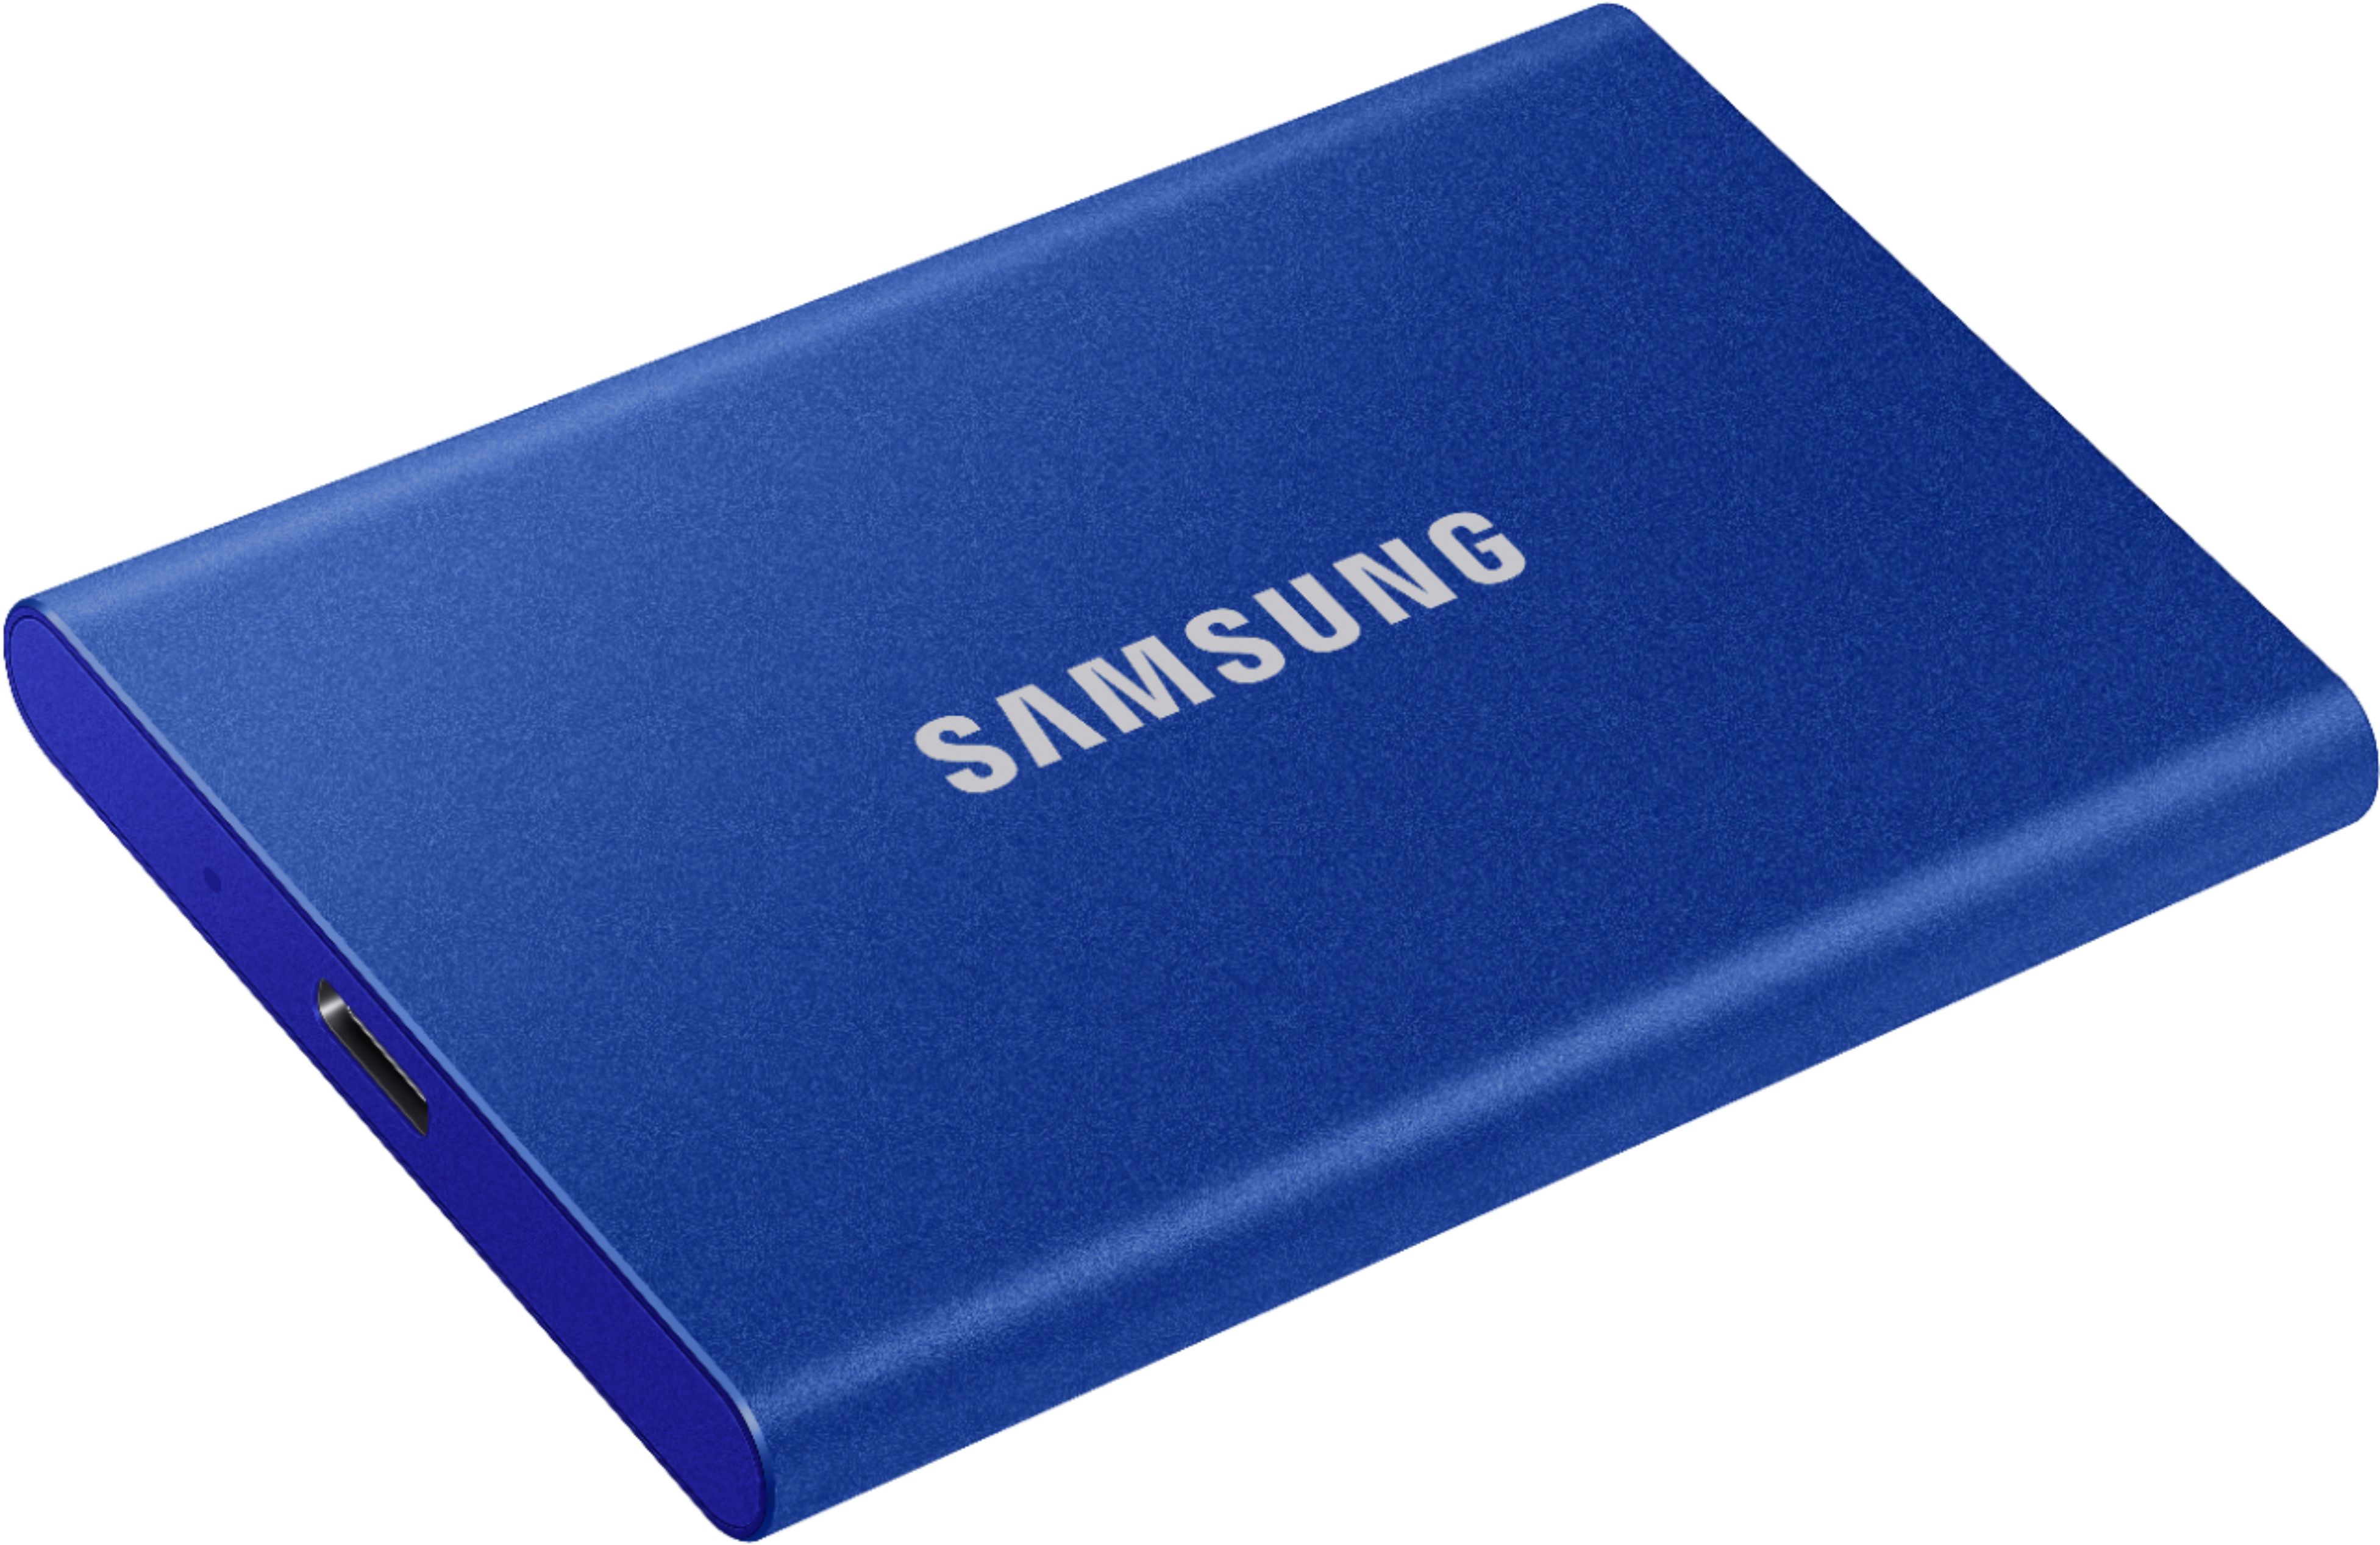 Disco sólido SSD externo Samsung Portable SSD T7 MU-PC1T0 1TB gris